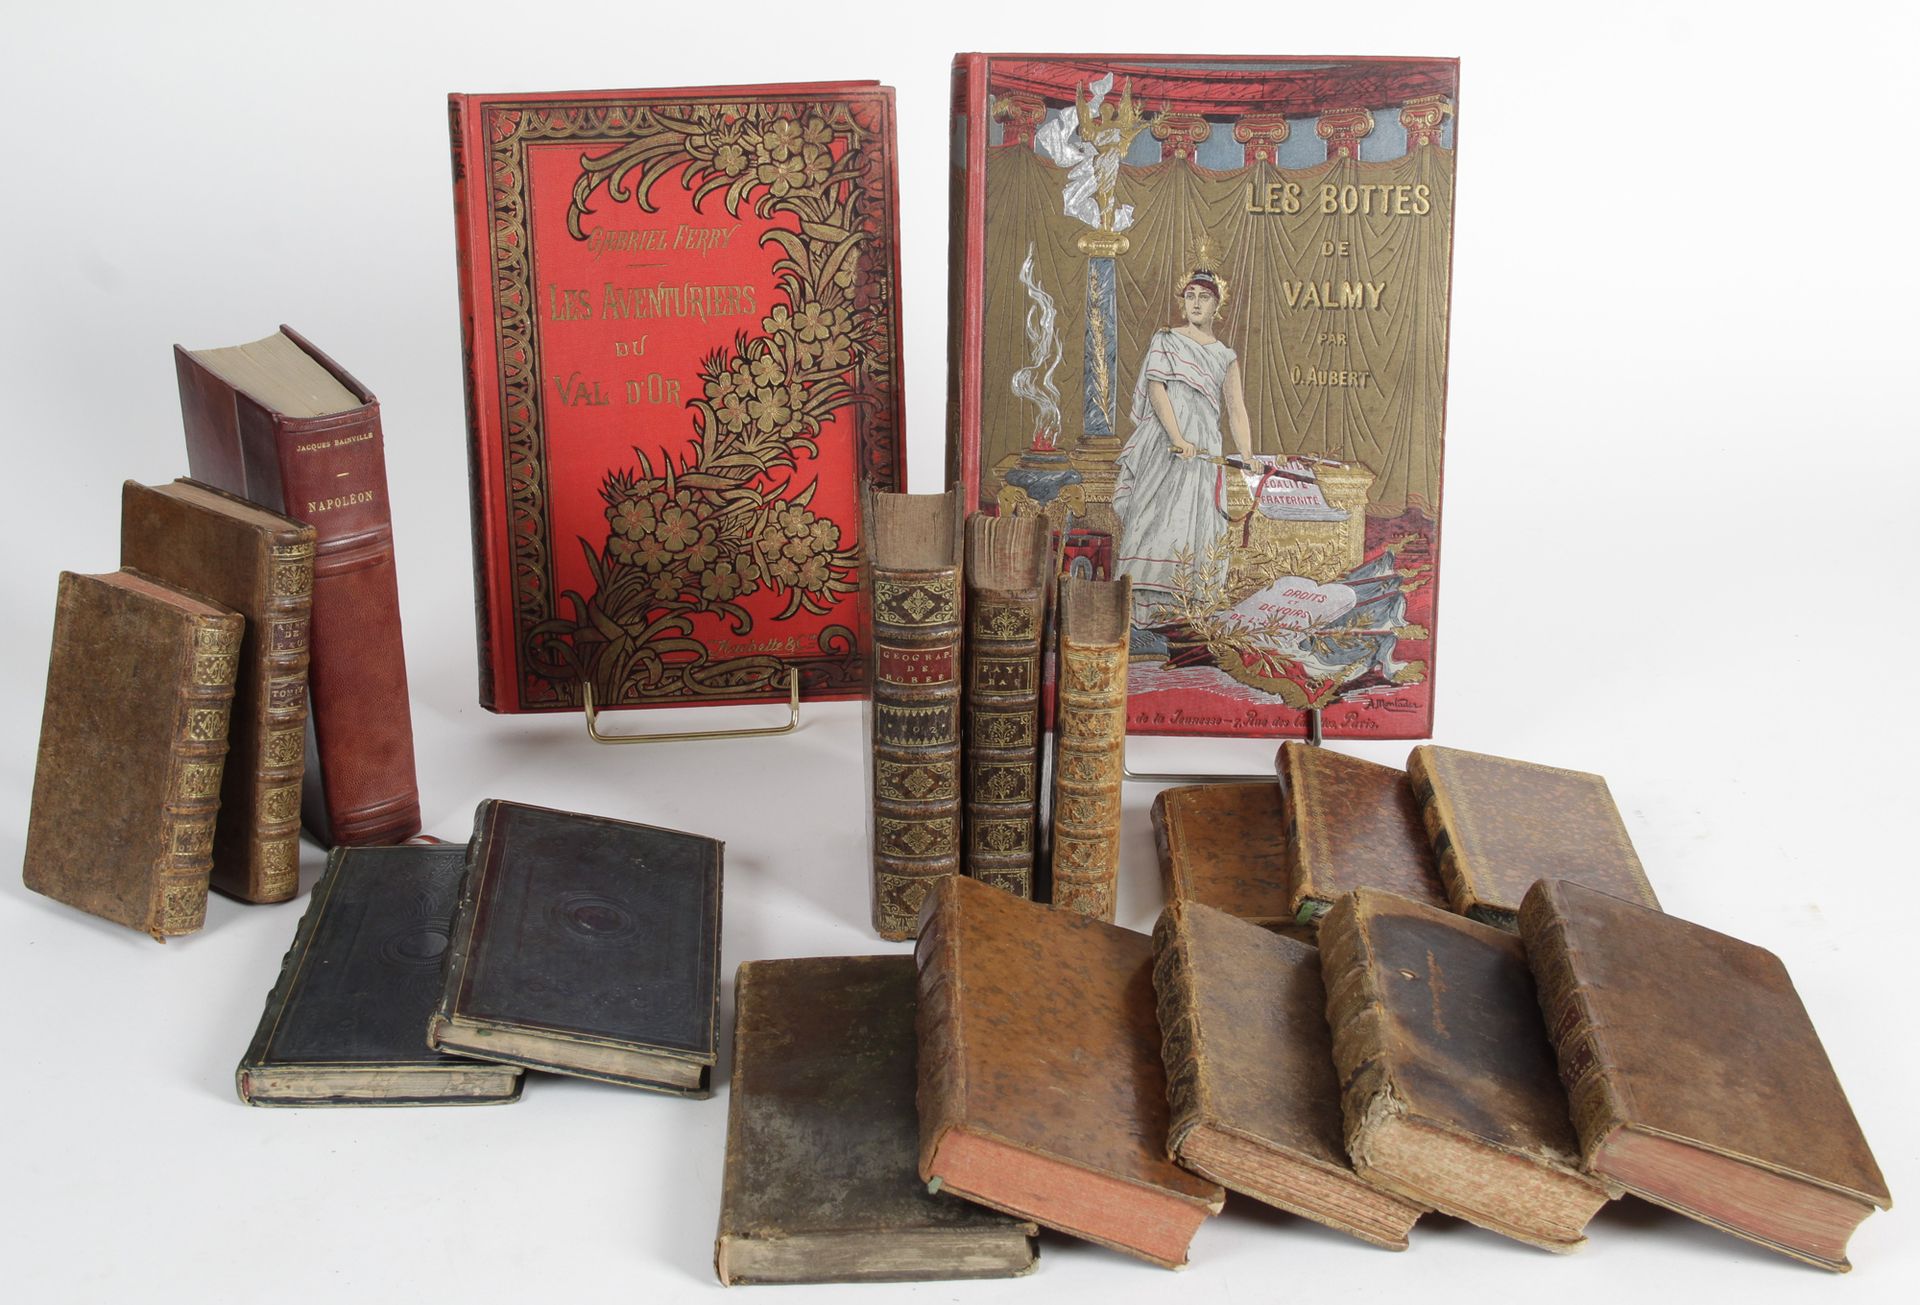 Null 一批重要的18世纪和19世纪的古董书。

-Les bottes de Valmy" by O. Aubert

- Les aventures du&hellip;